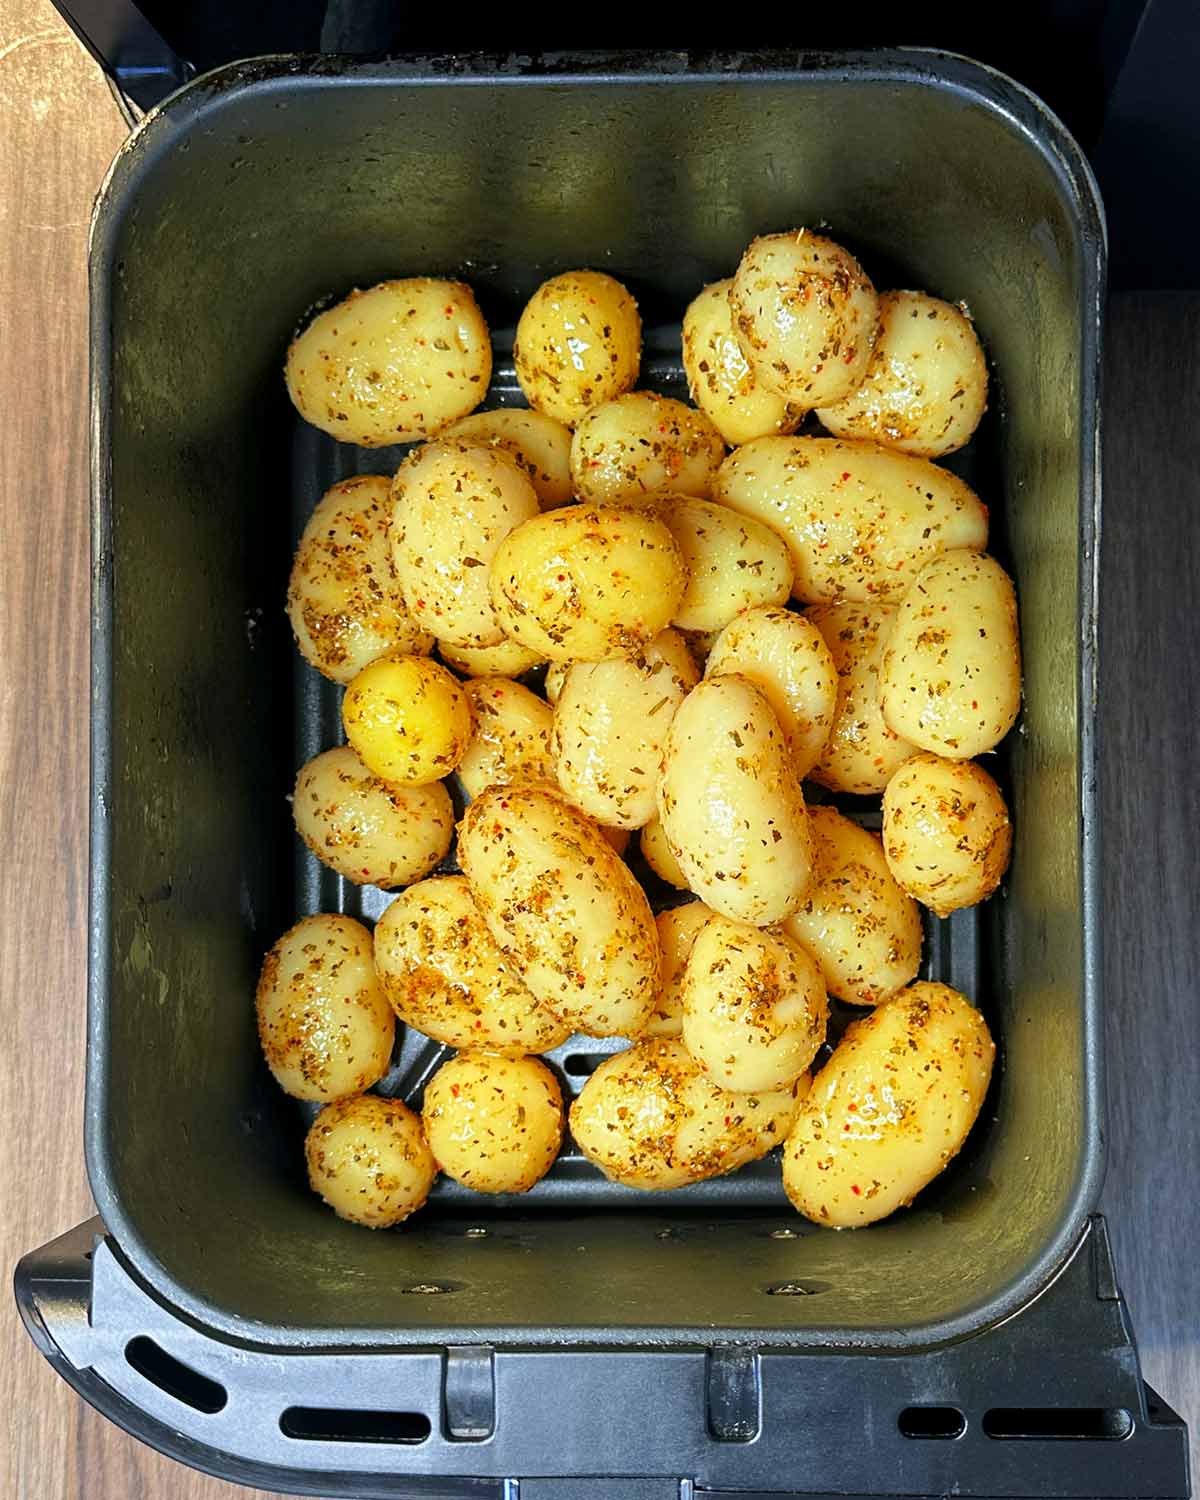 Seasoned new potatoes in an air fryer basket.